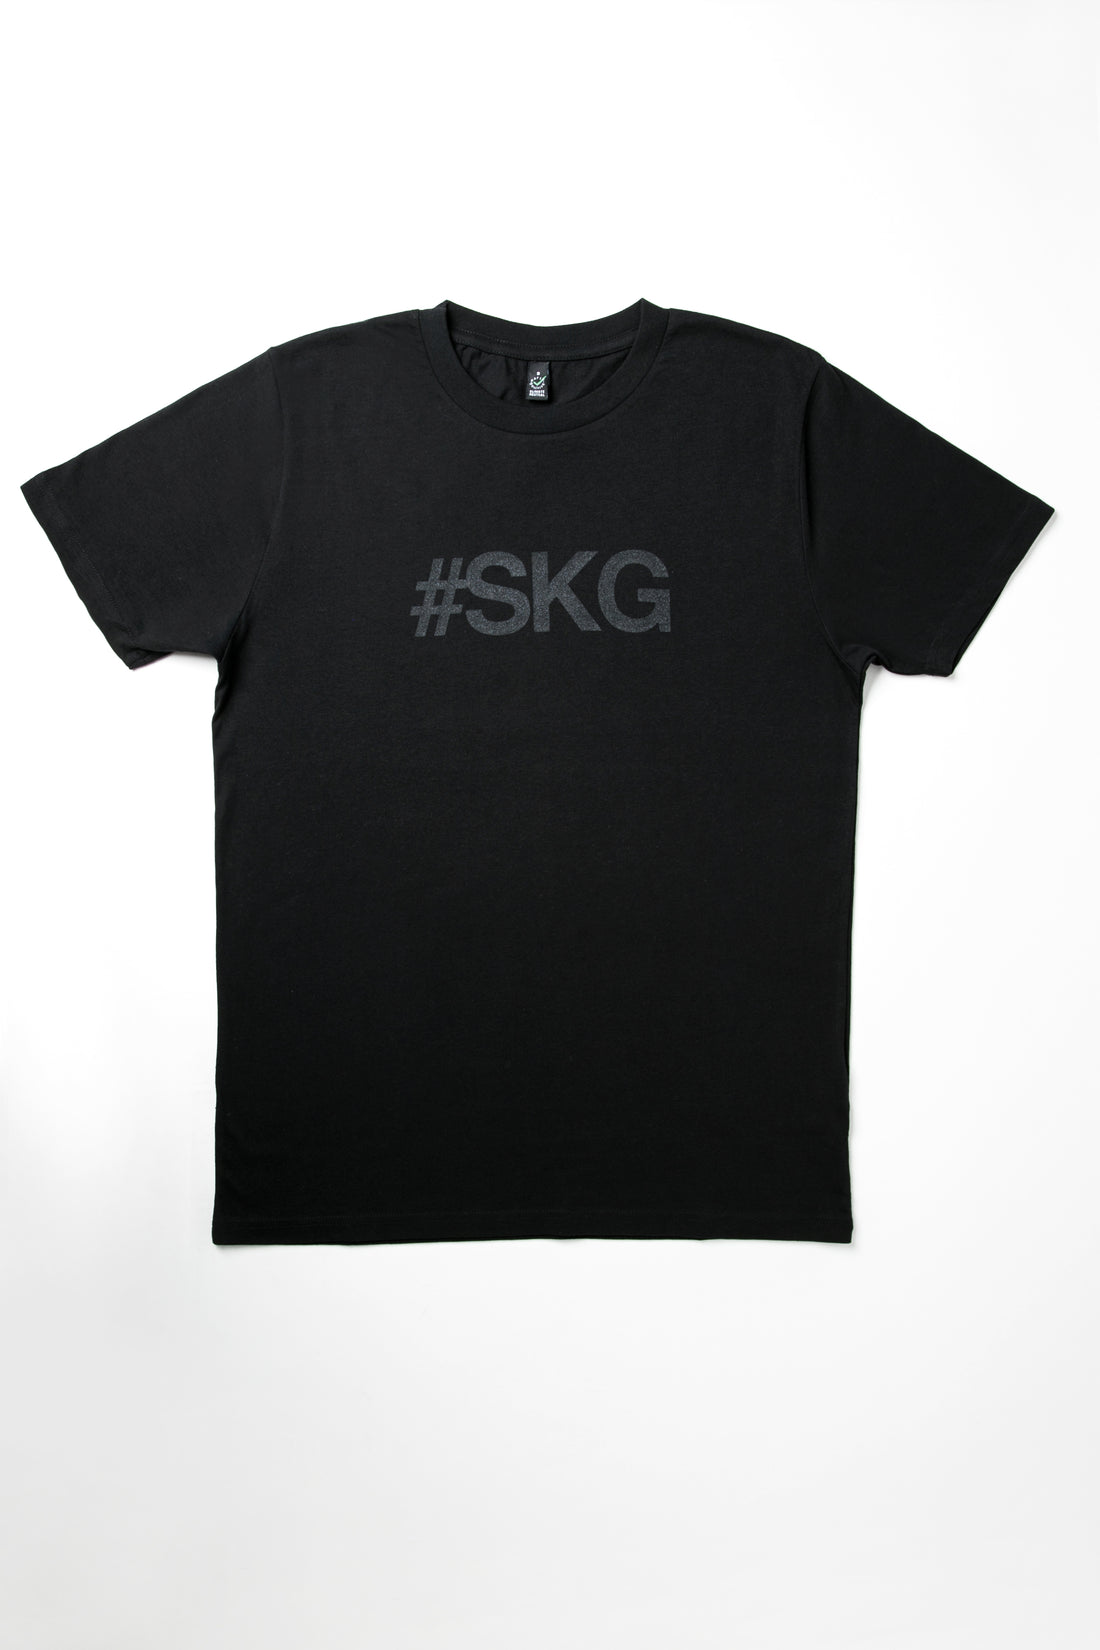 hellofrom SKG t-shirt